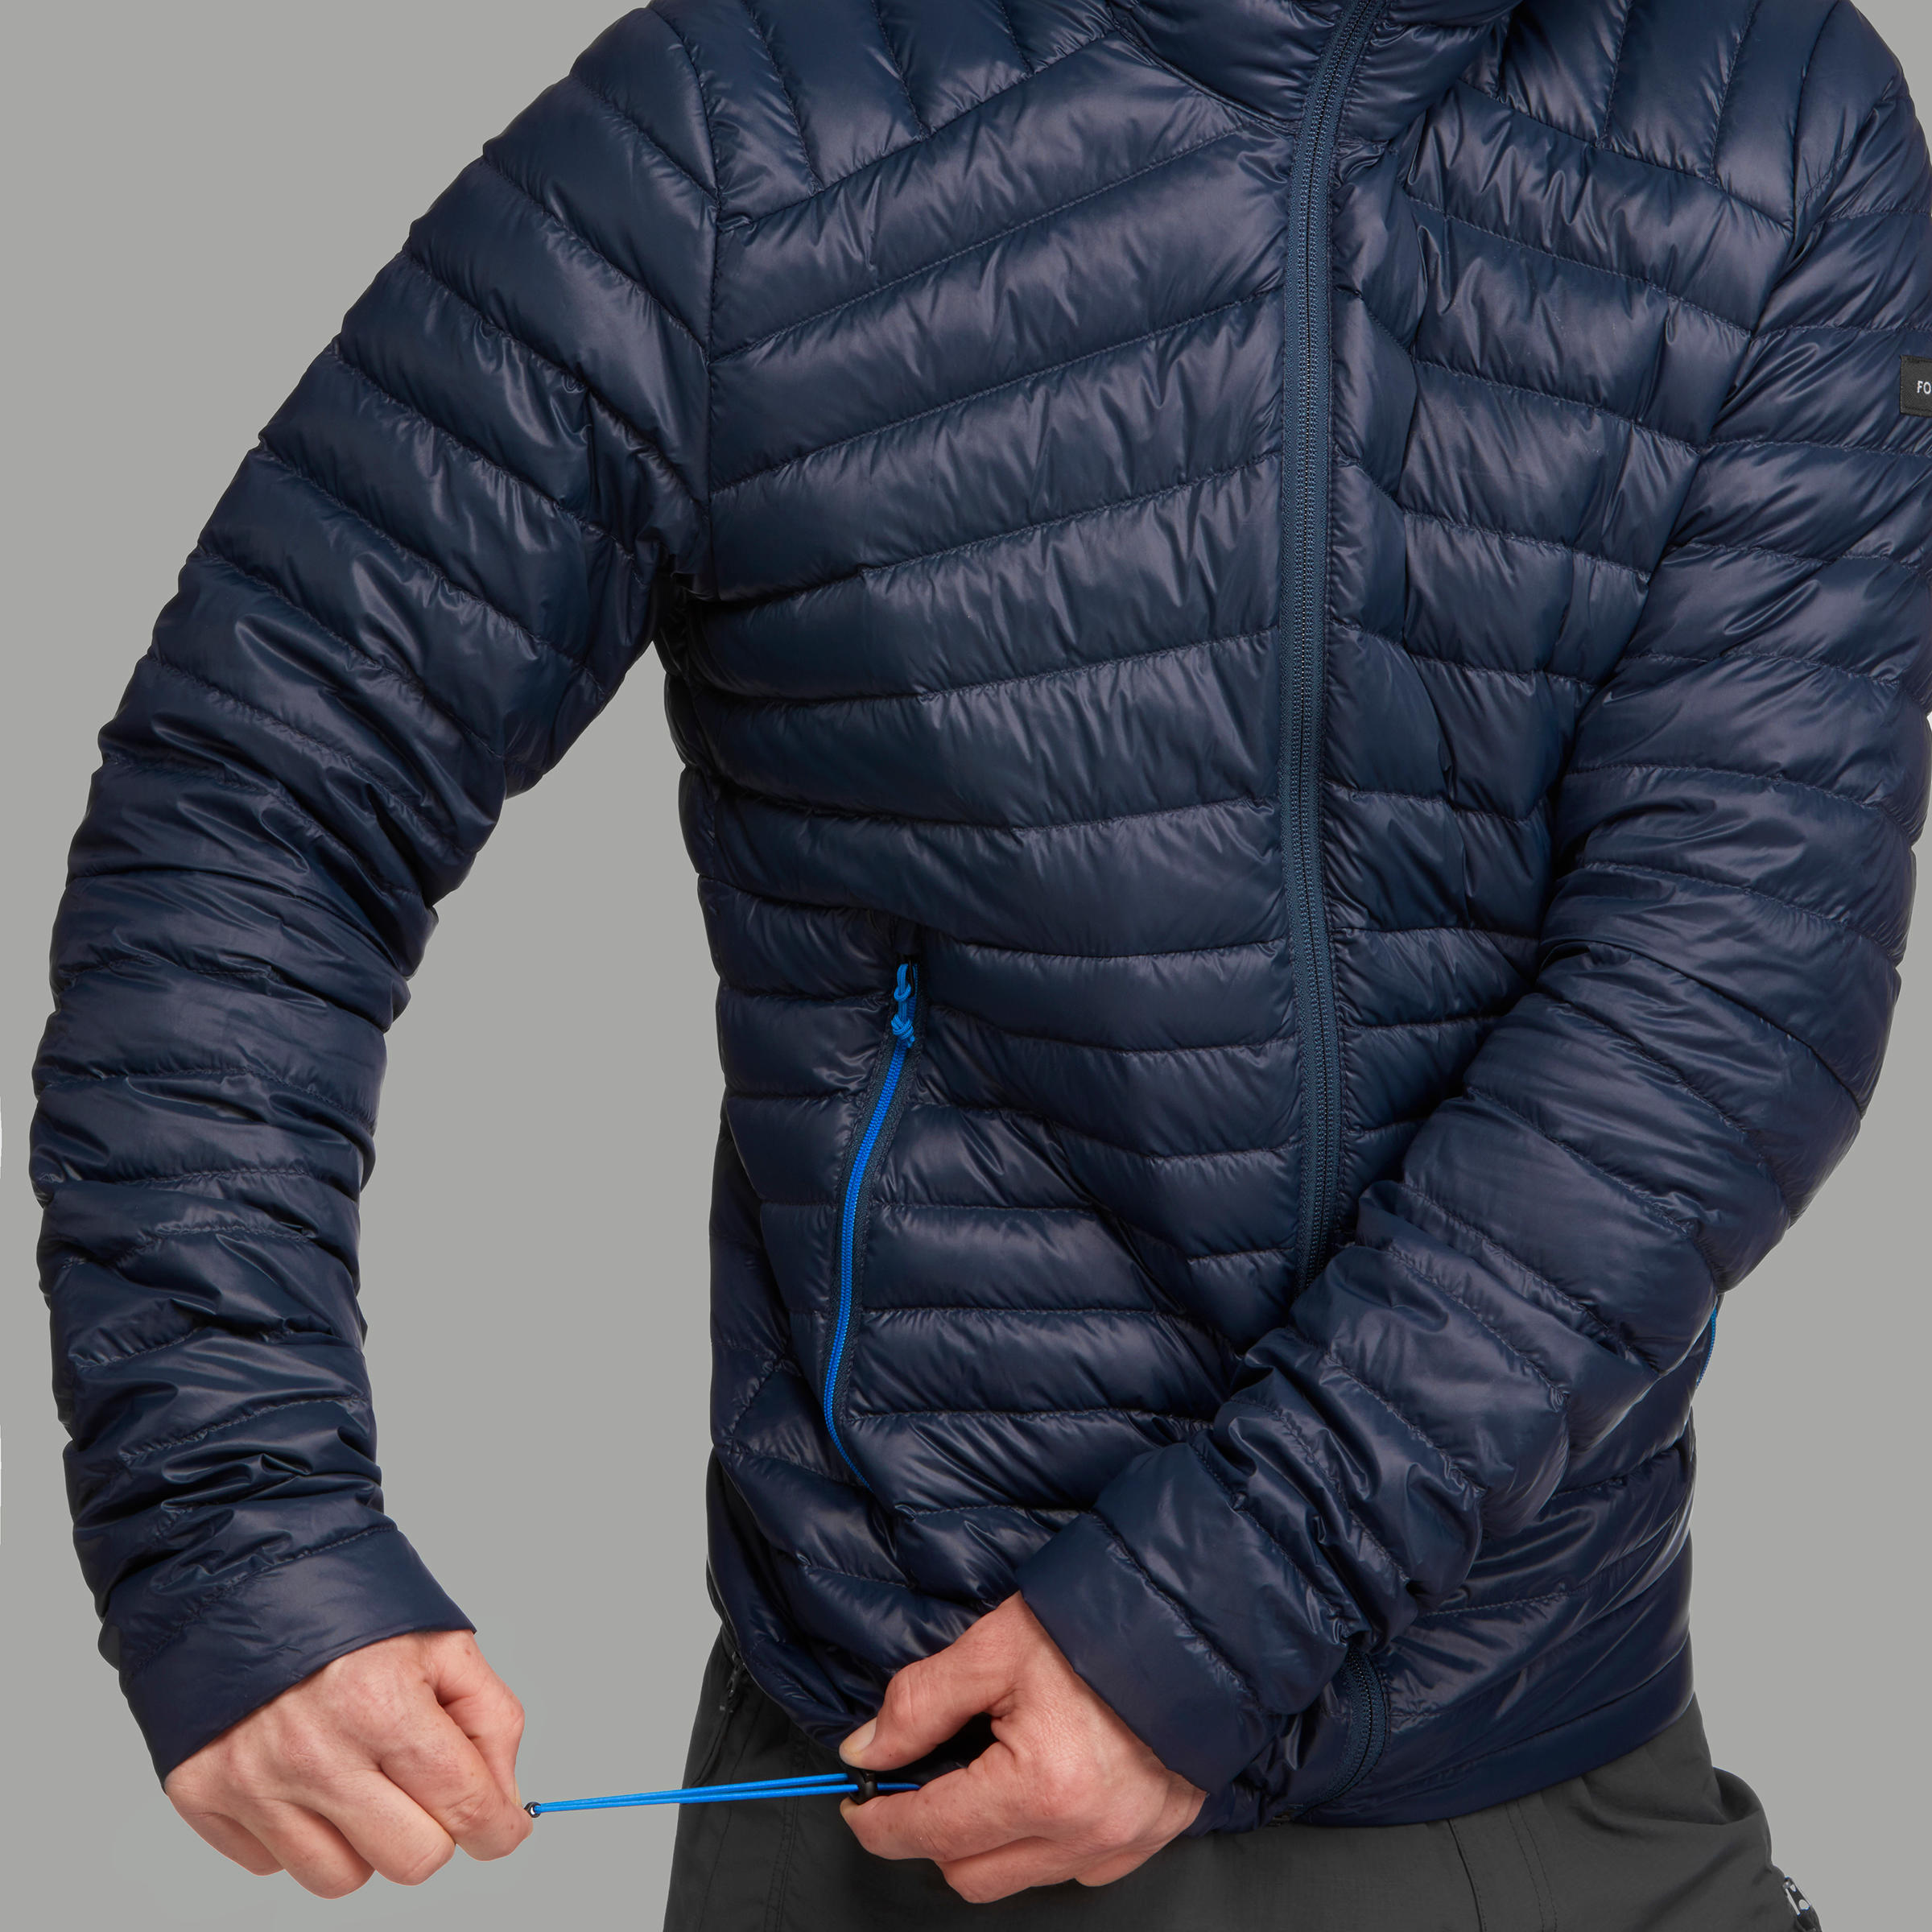 Buy Men's Trekking Down Feather Jacket 5°C Ultra Light And Compact Online